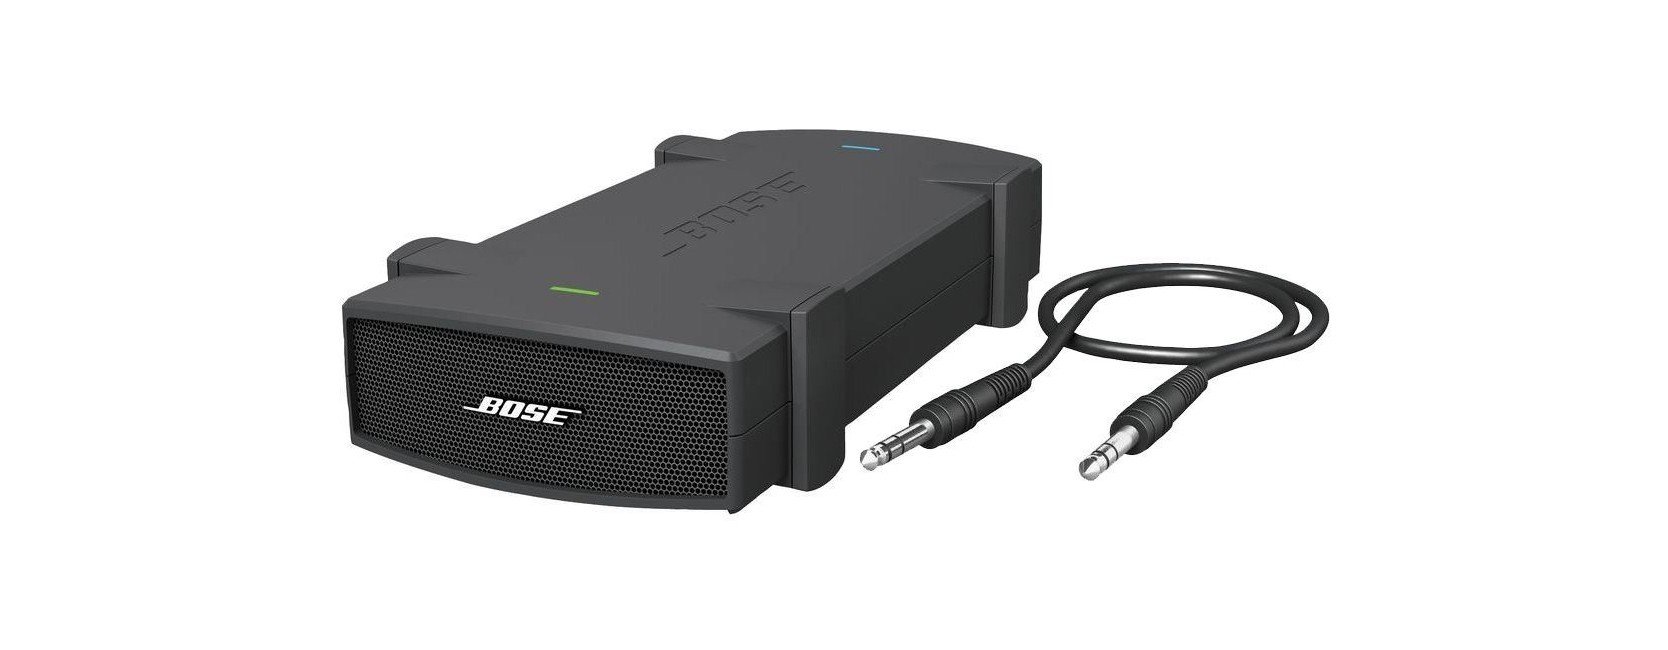 Bose - Model A1 - Packlite Amplifier